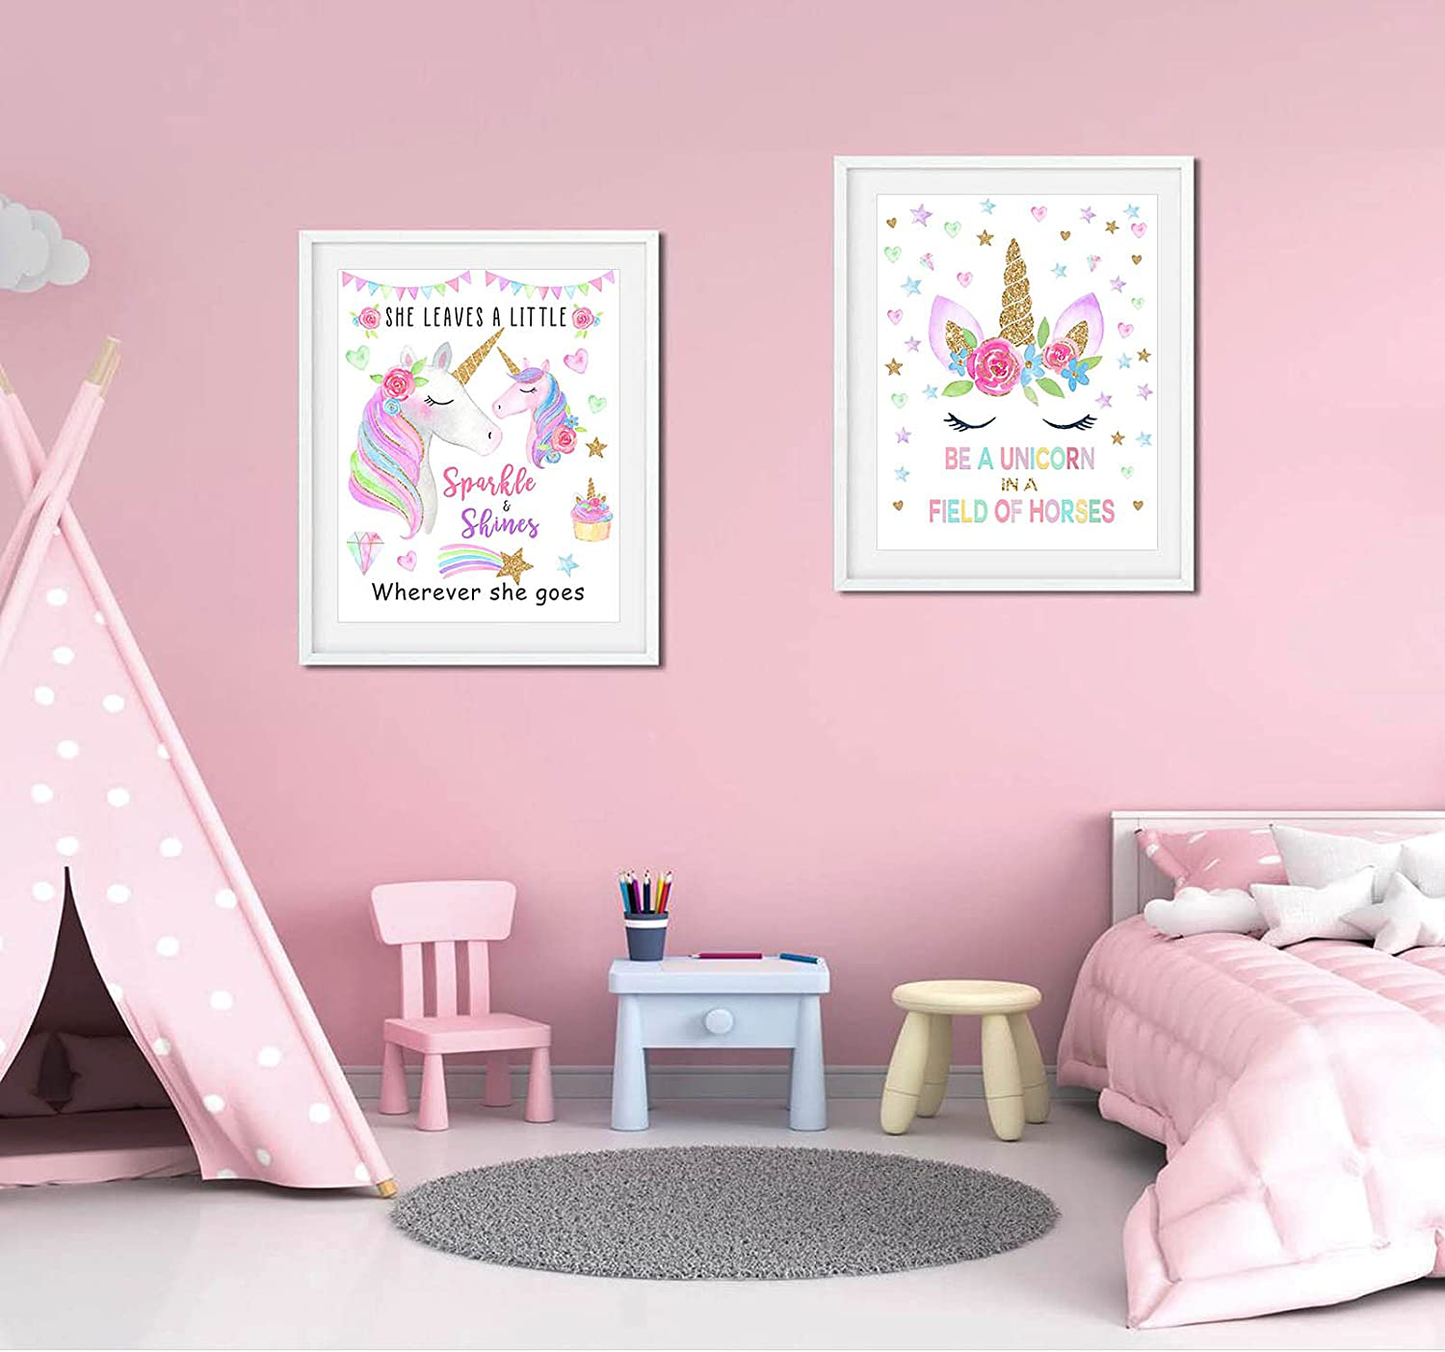 8pcs Girls Rainbow Unicorn Bedroom Decor, Unicorn Inspirational Wall Art Kids Room Posters, 8x10" Unframed Unicorn Wall Art Nursery Decor Girl's Gift